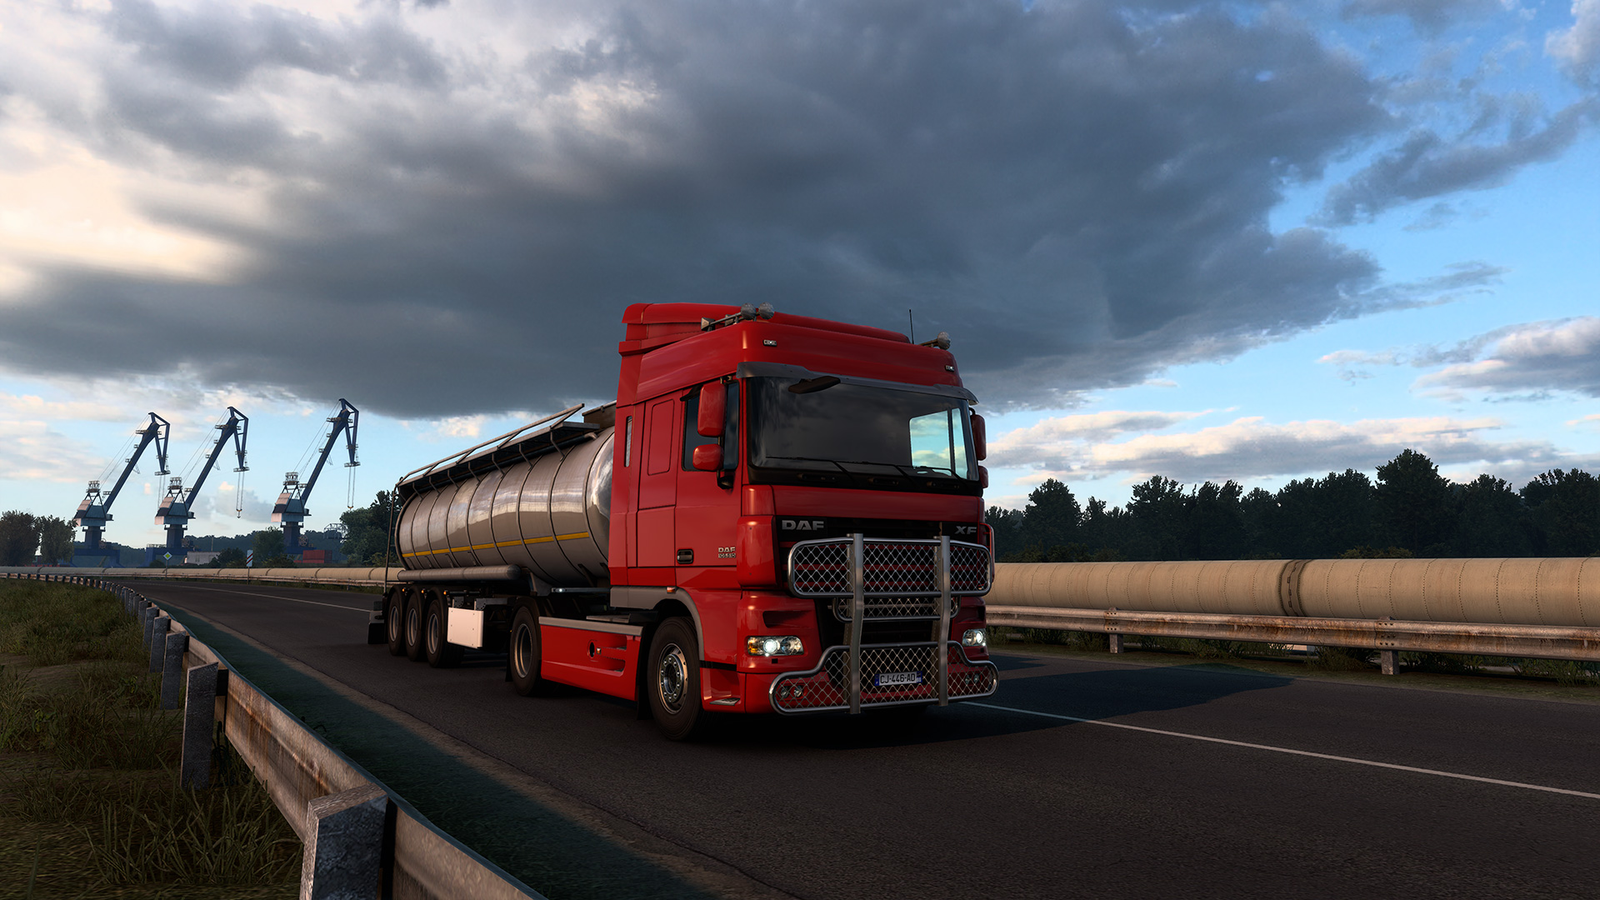 Euro Truck Simulator 2 now has fancier lighting and a fancier